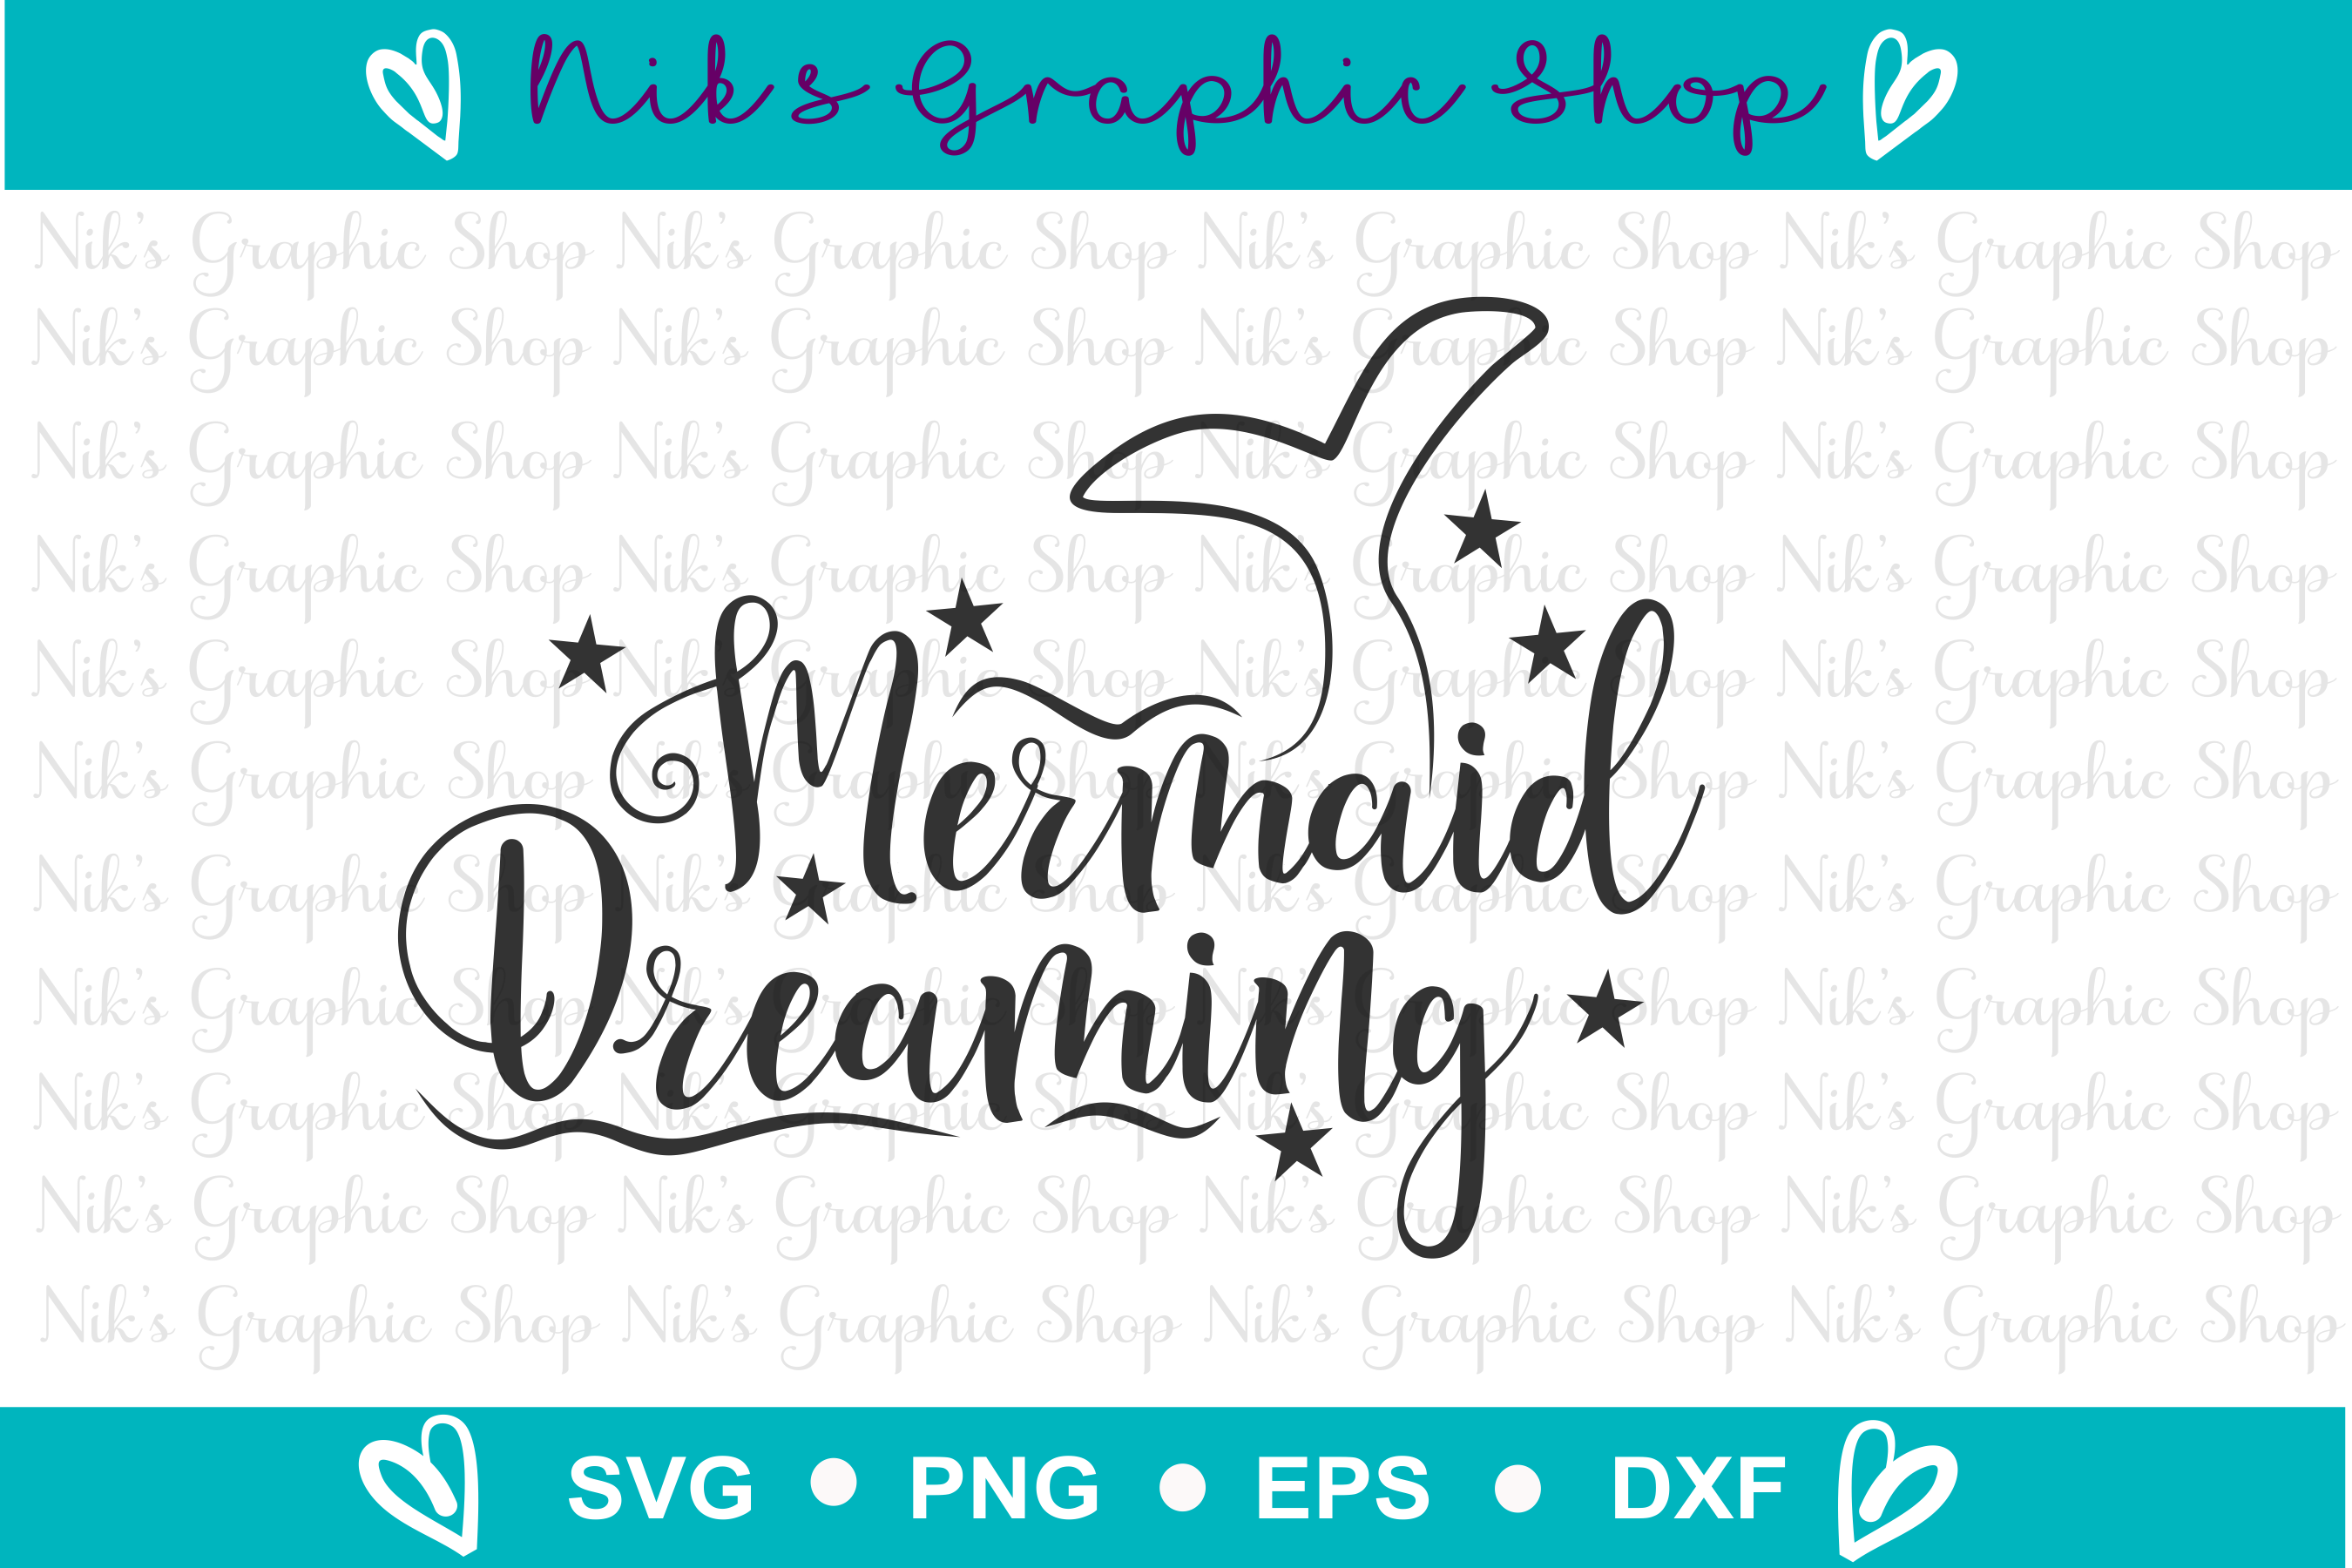 Free Free Dream Big Little Mermaid Svg 396 SVG PNG EPS DXF File